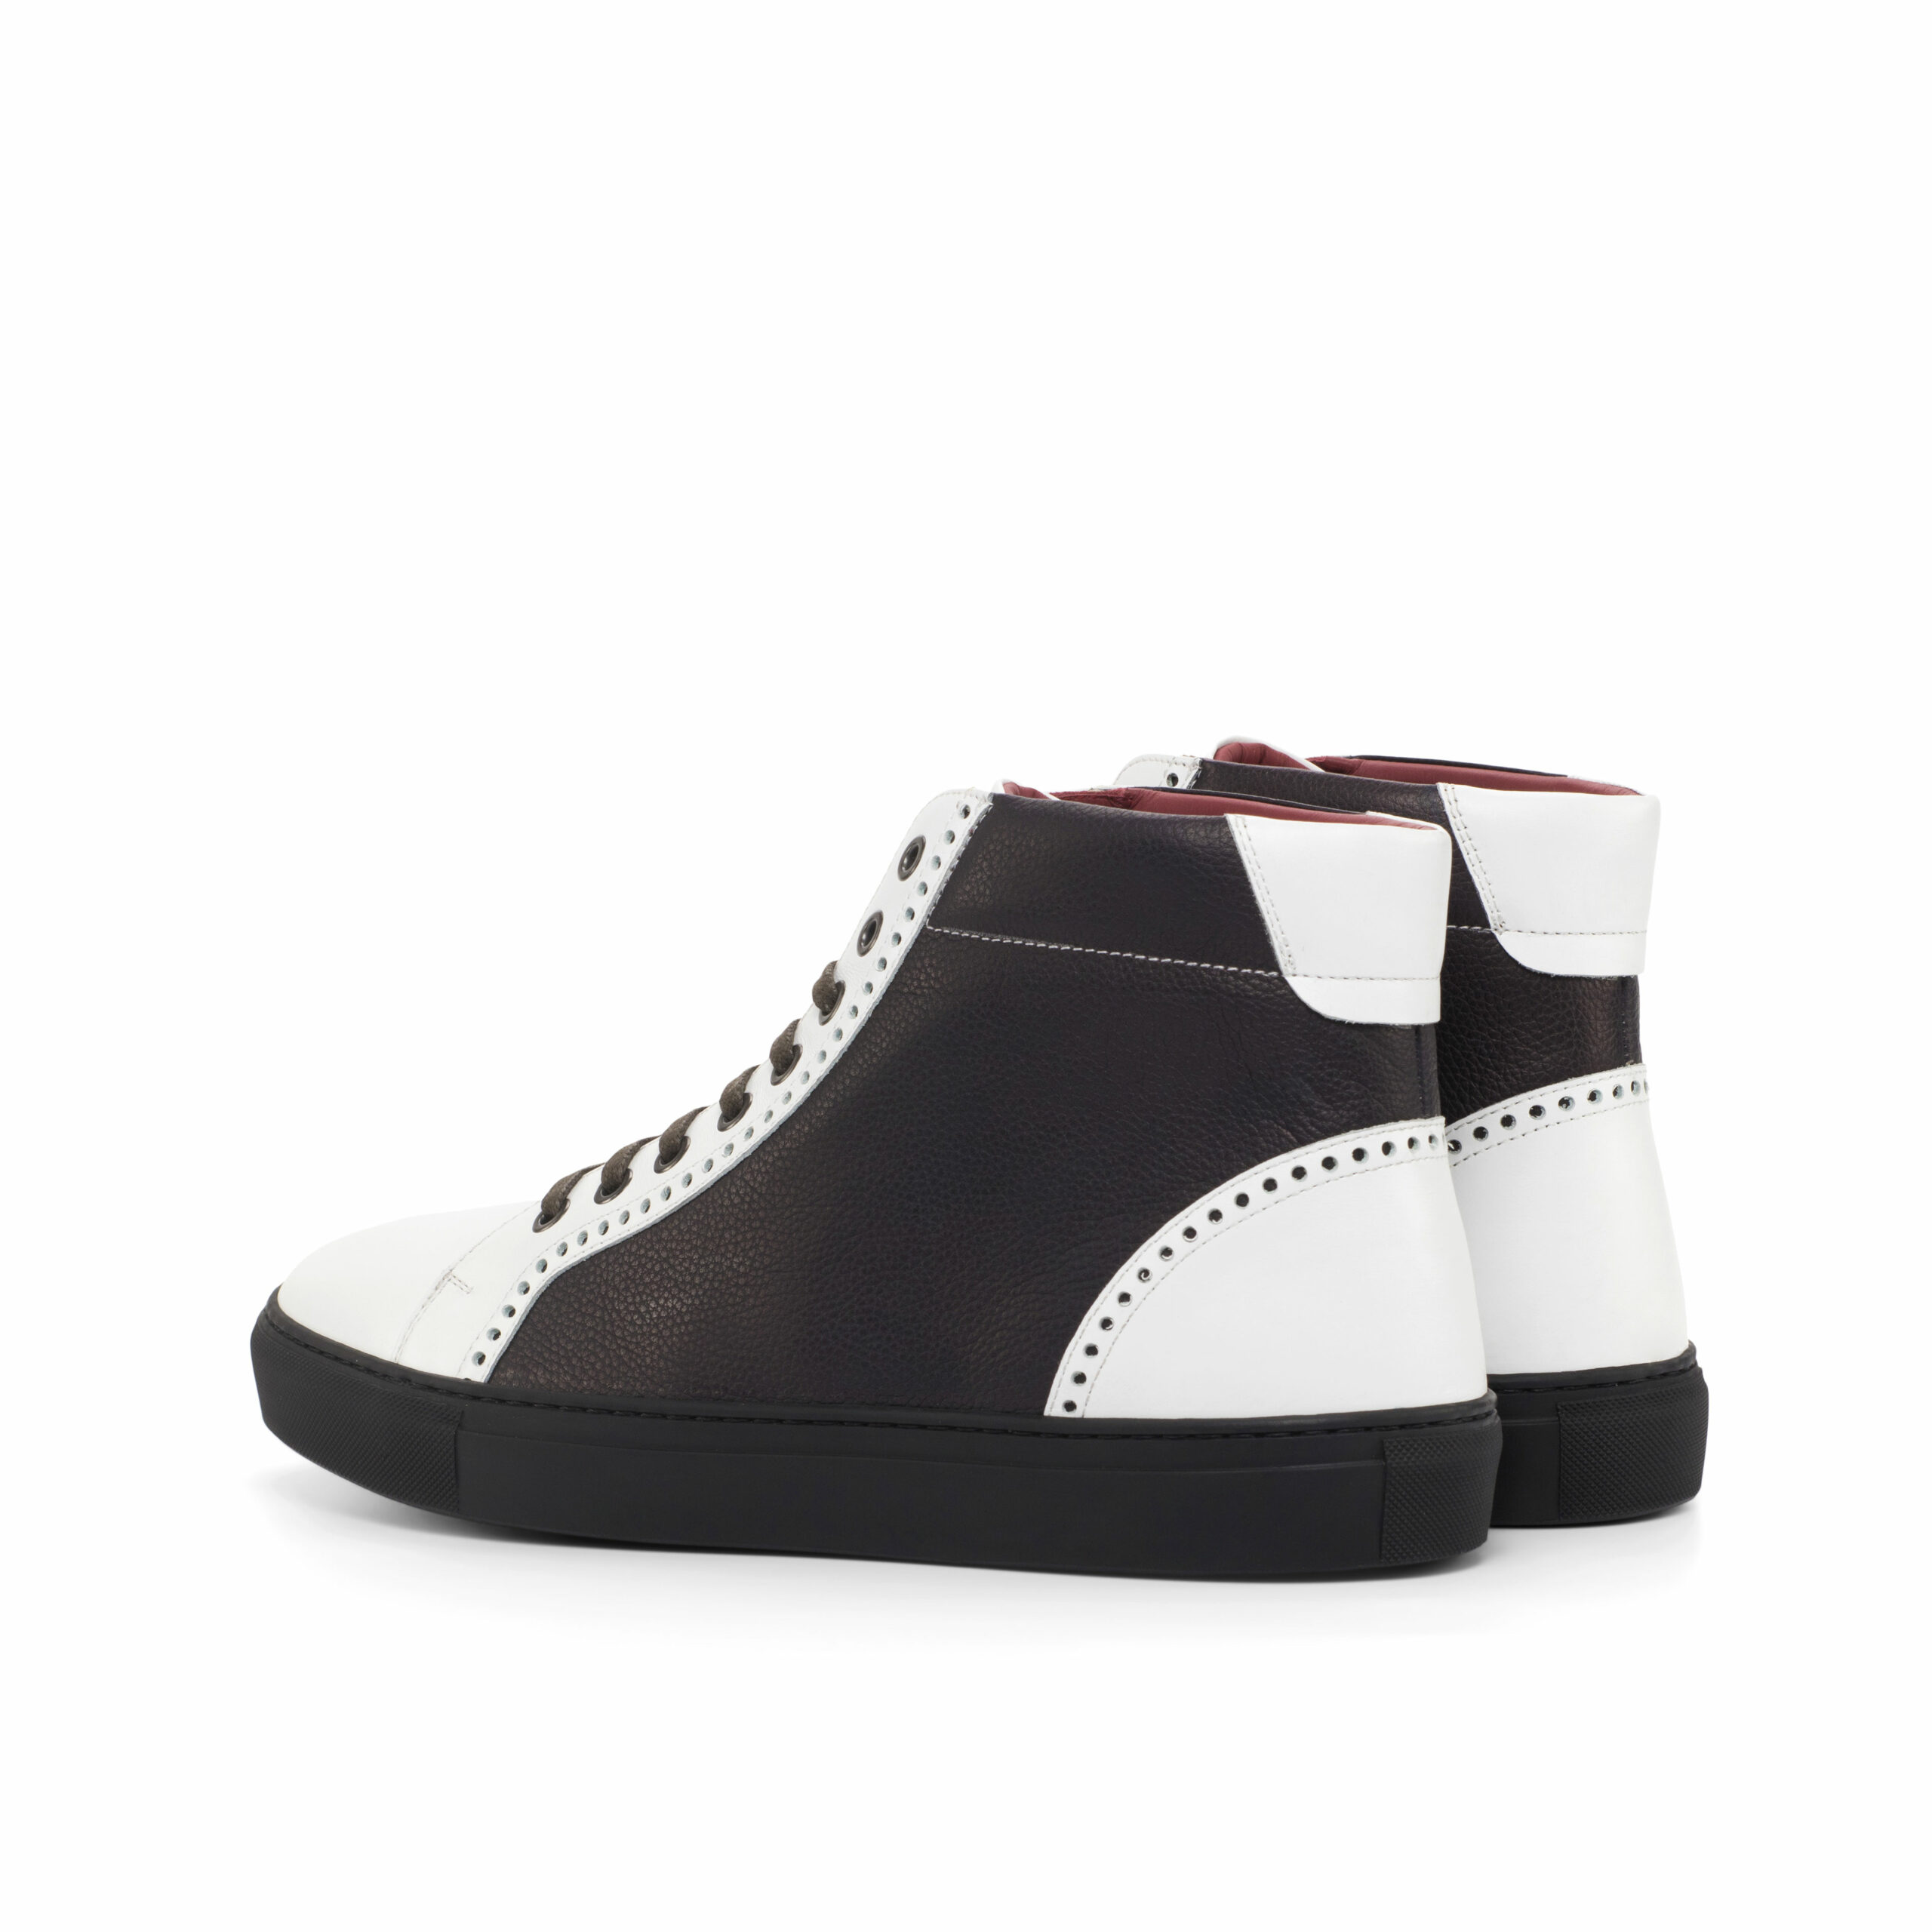 Bottom view of model Mens Casual High Kicks Custom Sneaker - Model 4585, Chris Z Shoes